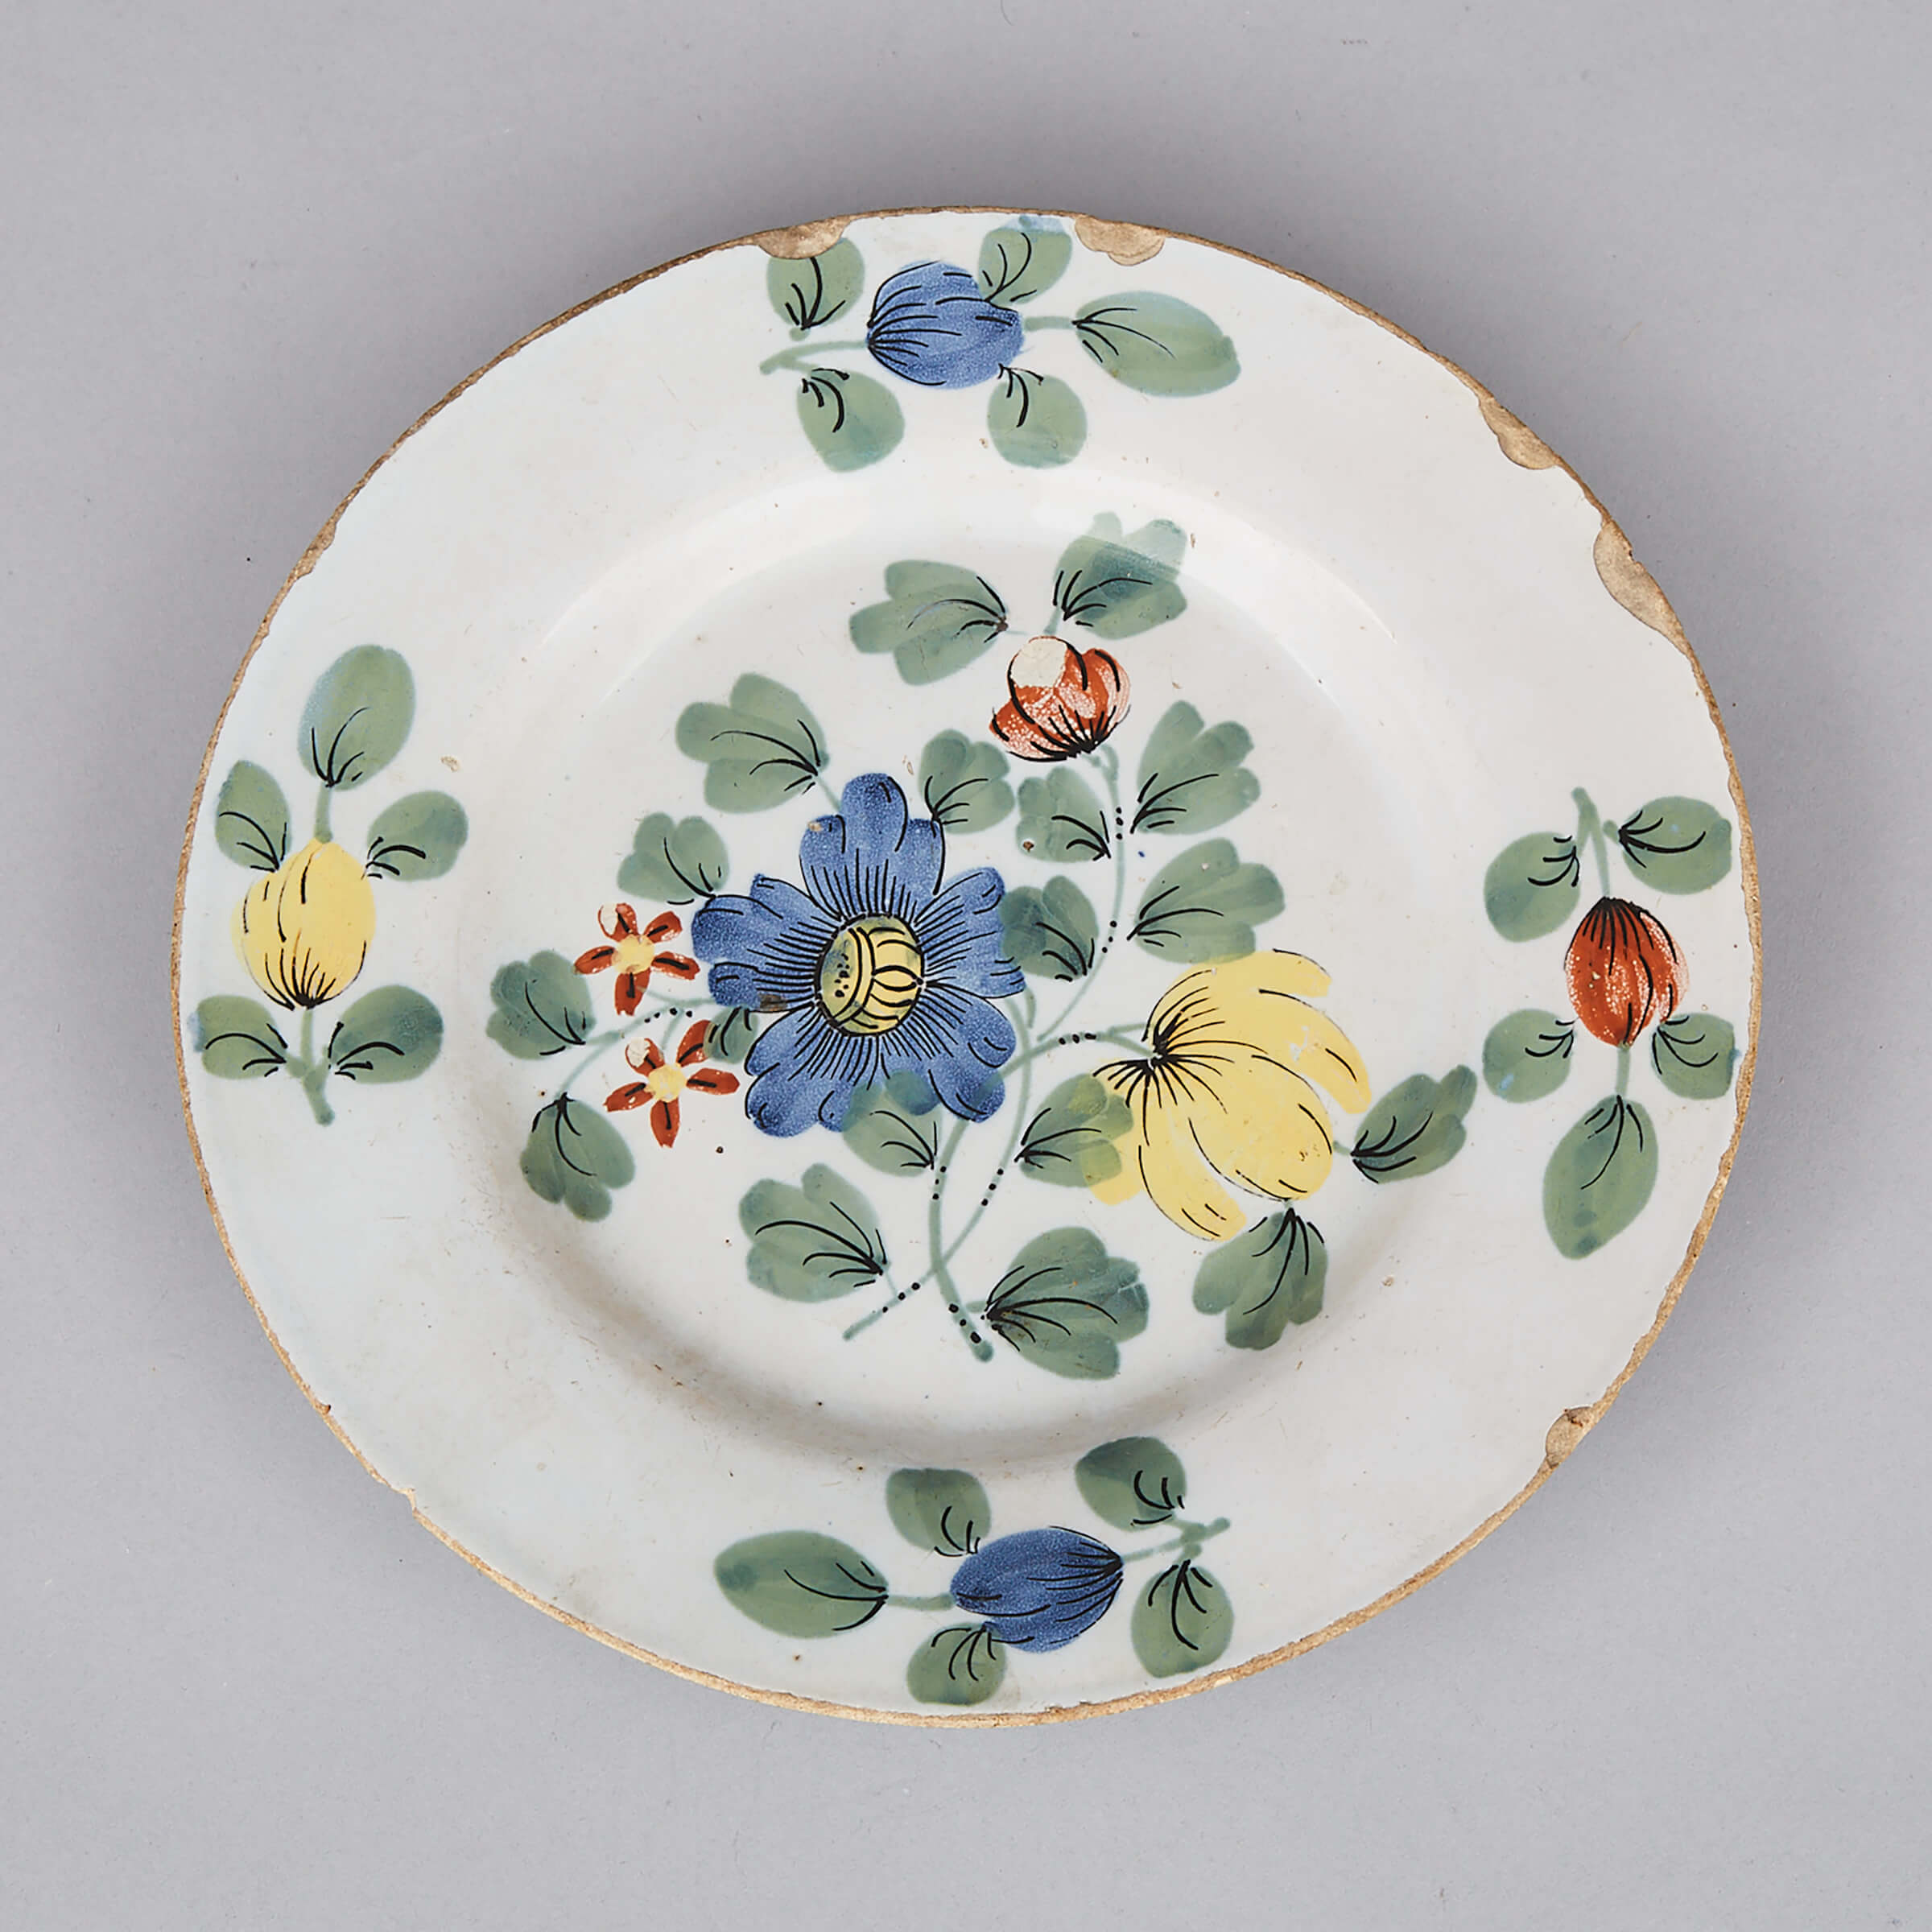 Liverpool Delft Polychrome Floral Plate, c.1750